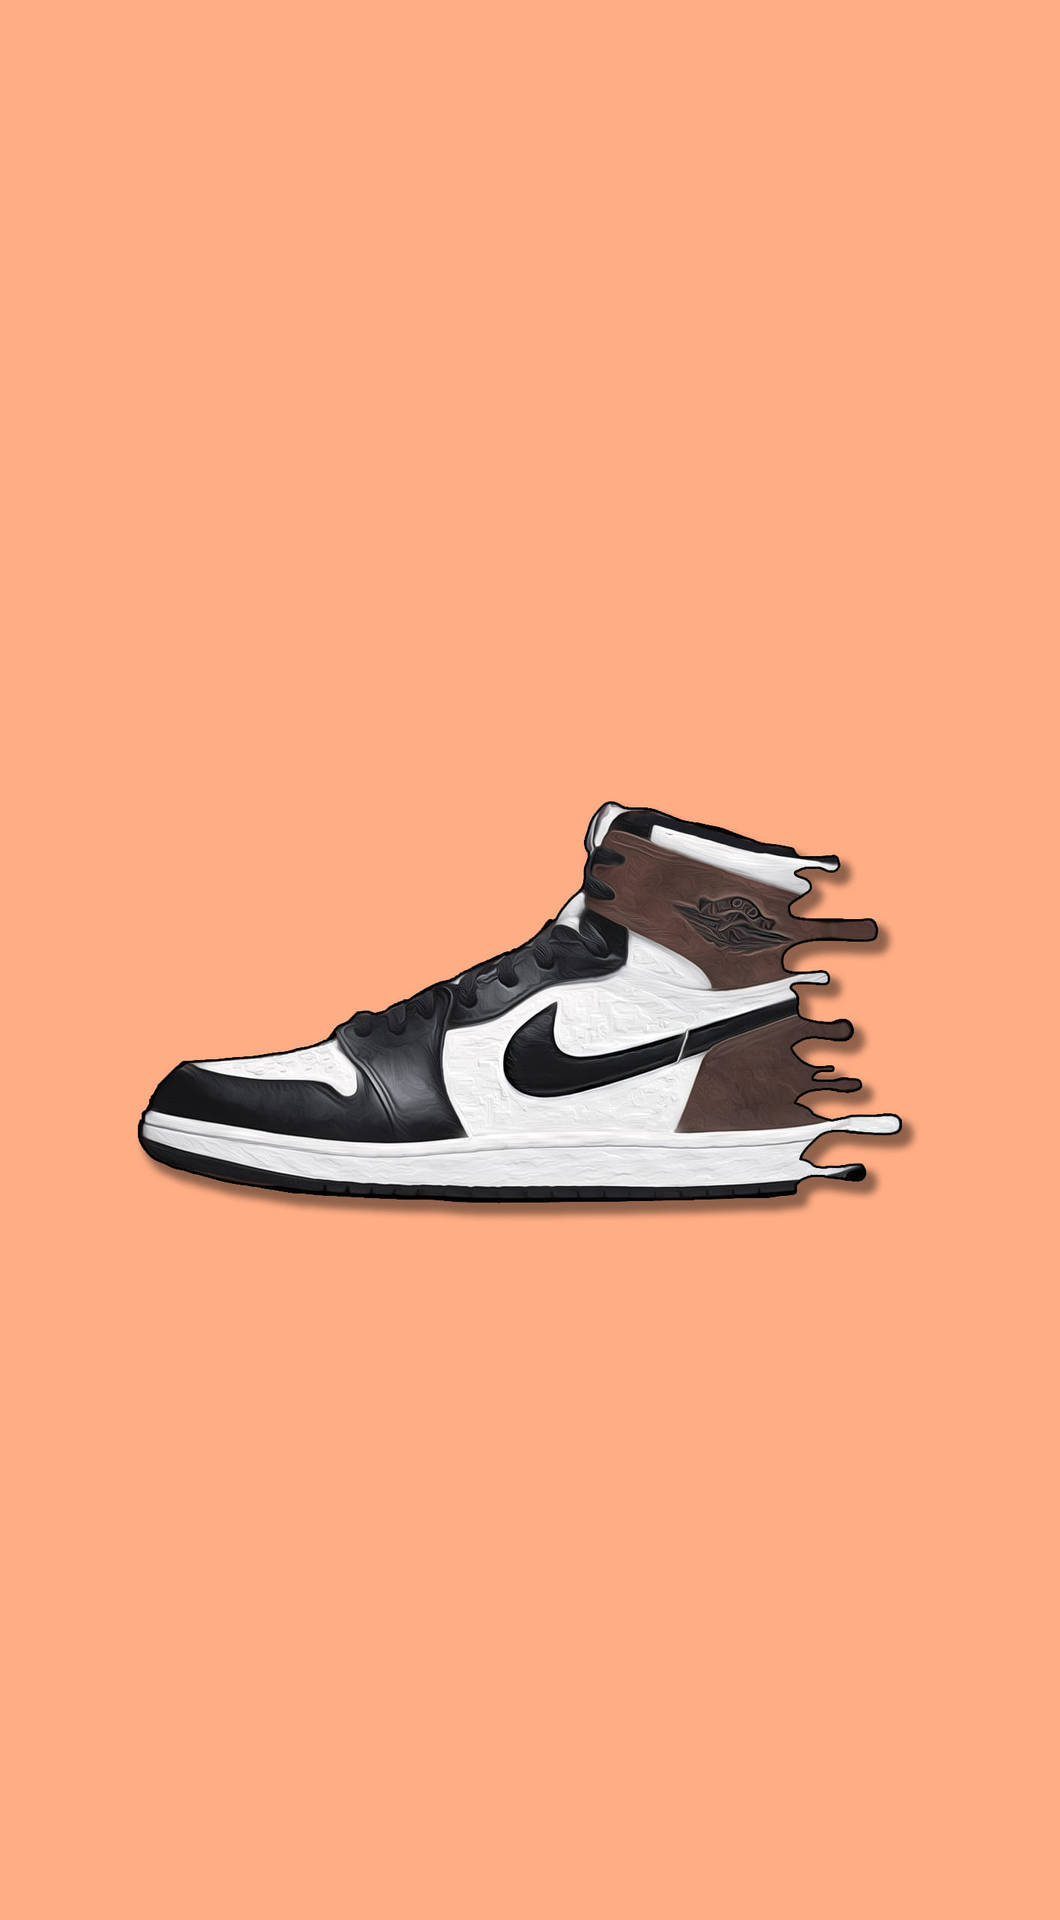 Distorted Nike Jordan 1 Background